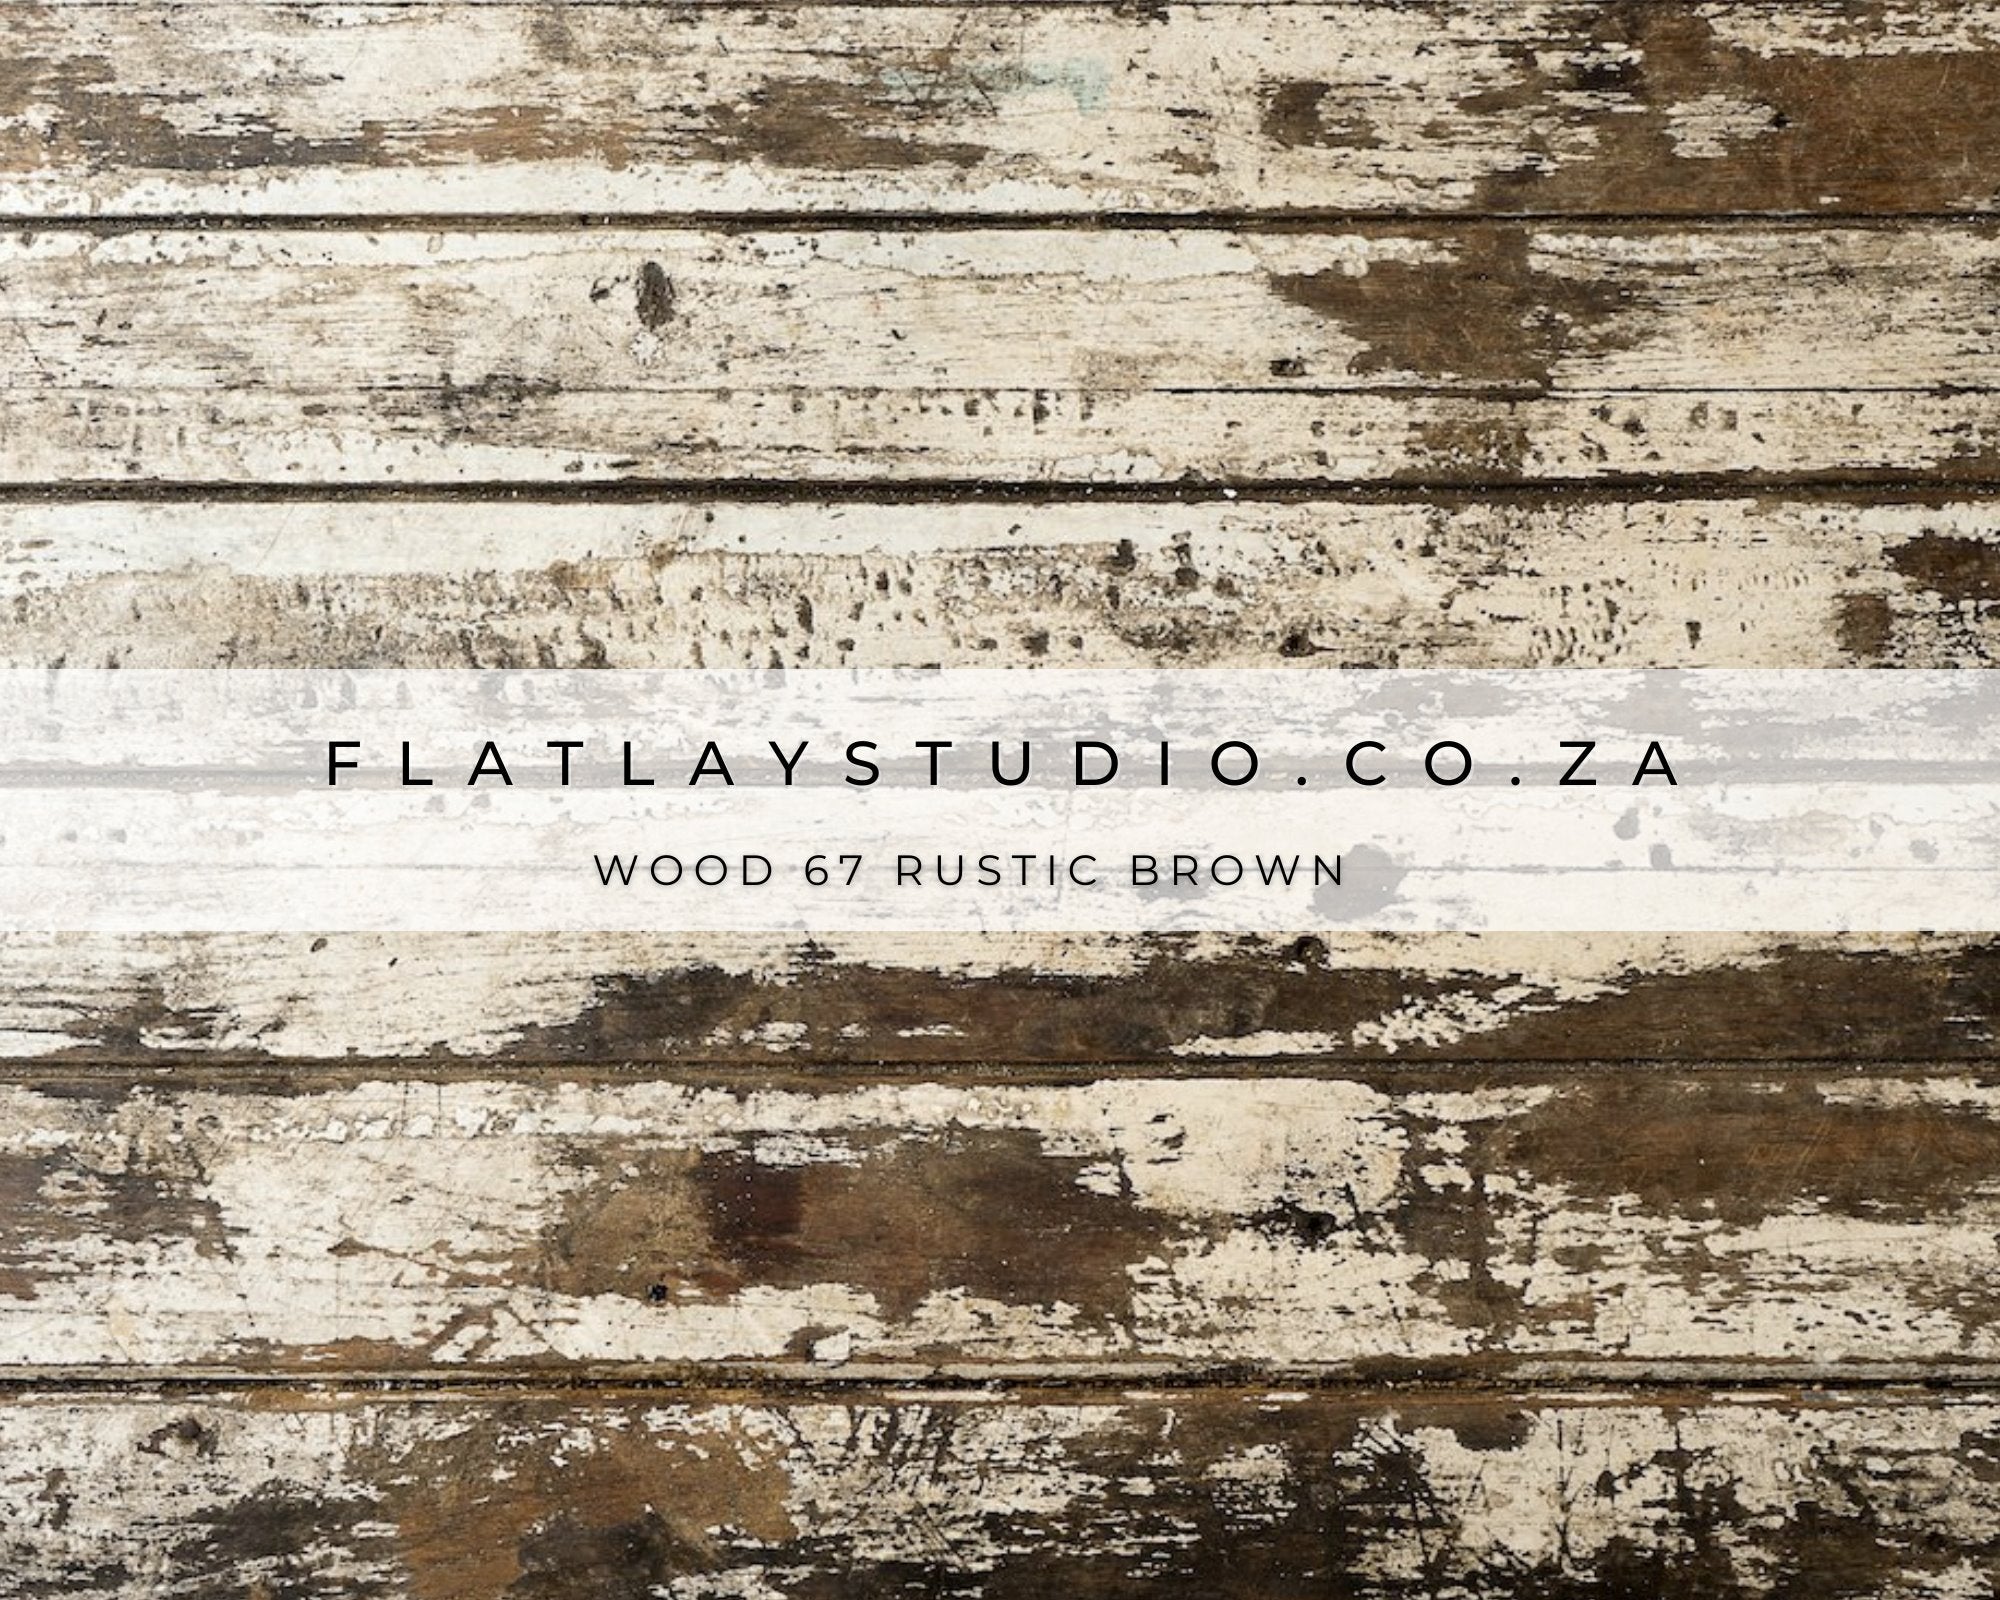 Wood 67 Rustic Brown Flatlay Styling Board Flatlay Studio 